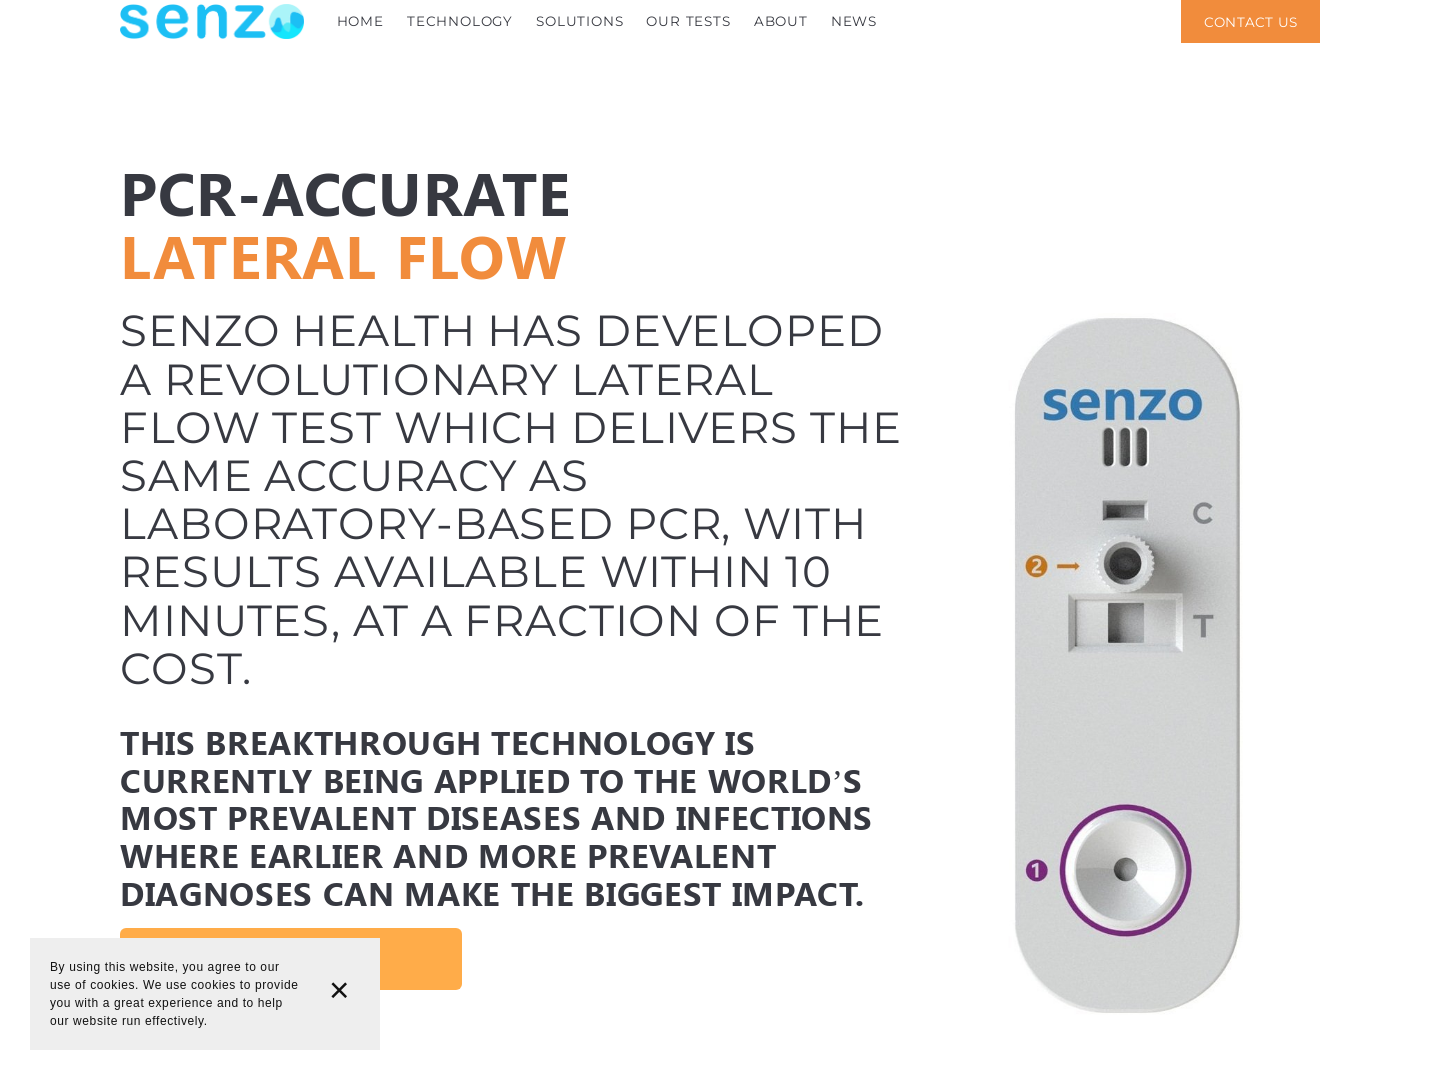 "Senzo Health Raises $1.8M to Develop Innovative Diagnostic Technologies"